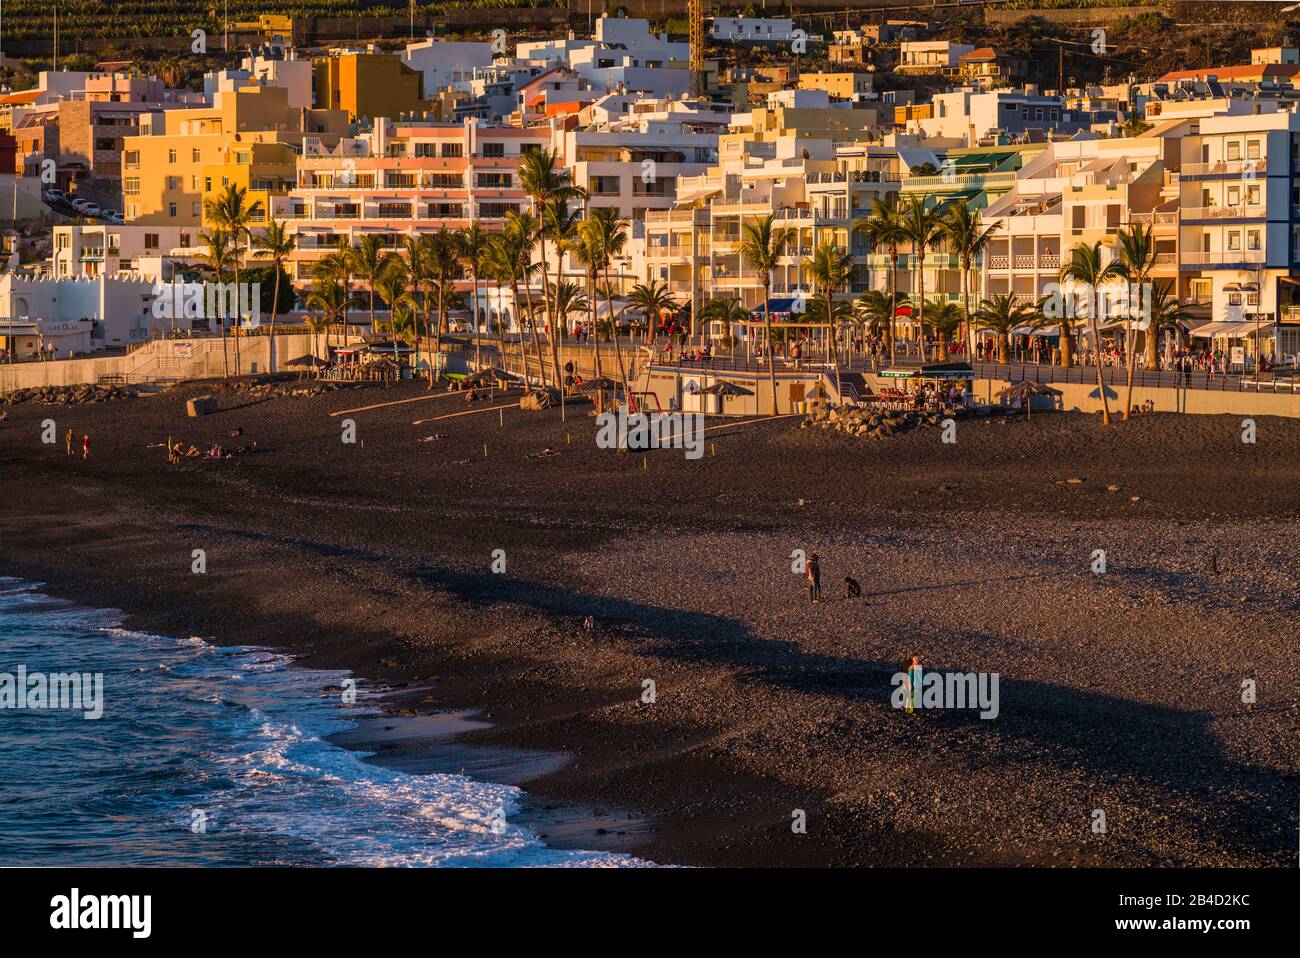 Spain, Canary Islands, La Palma Island, Puerto Naos, resort town view Stock Photo